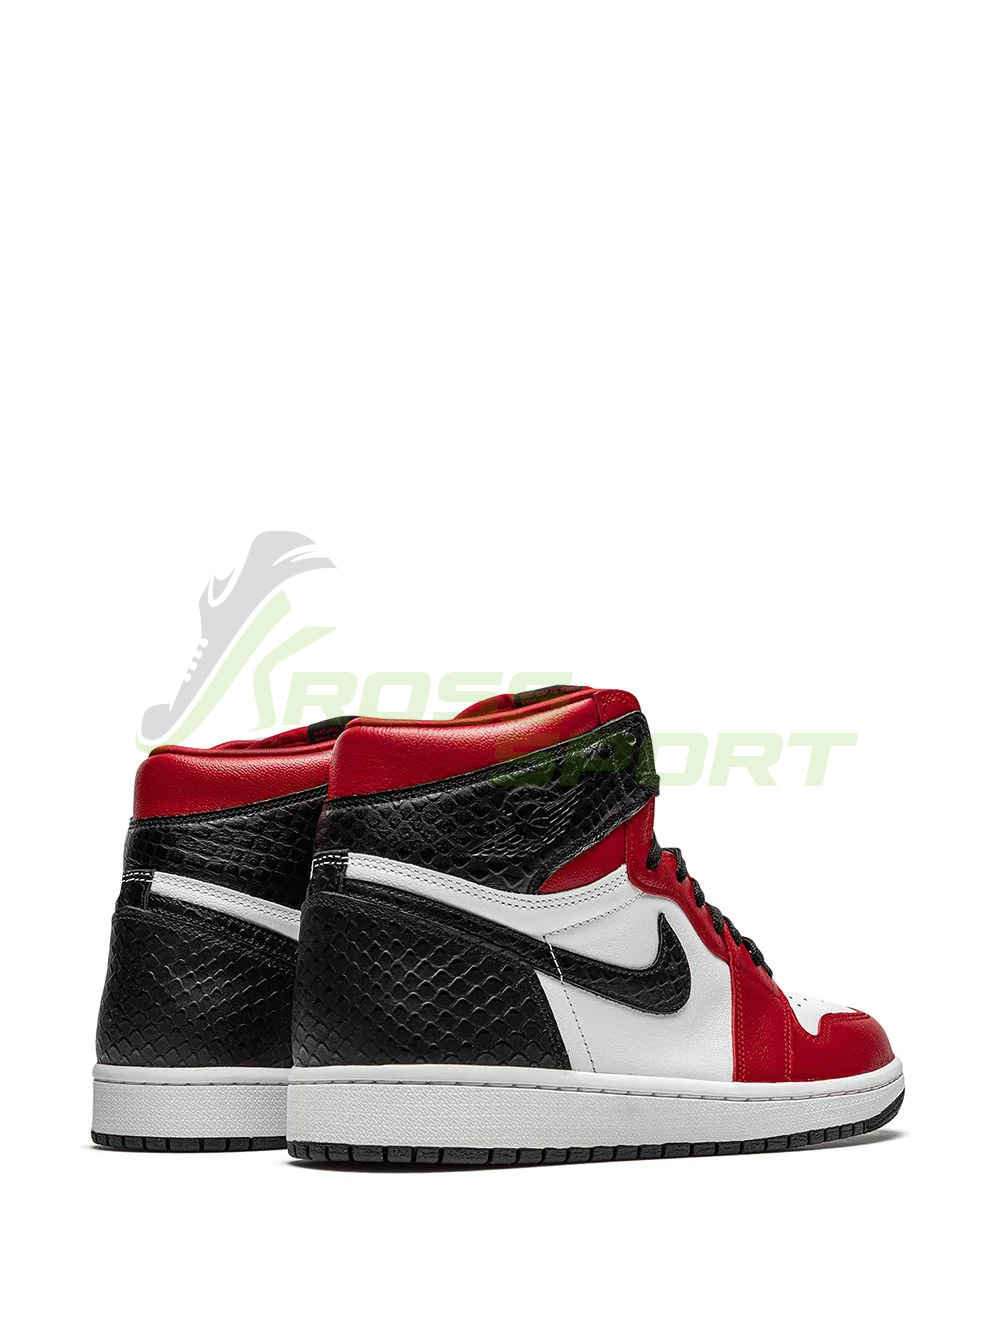  Nike Air Jordan 1 Retro Black/White/Red